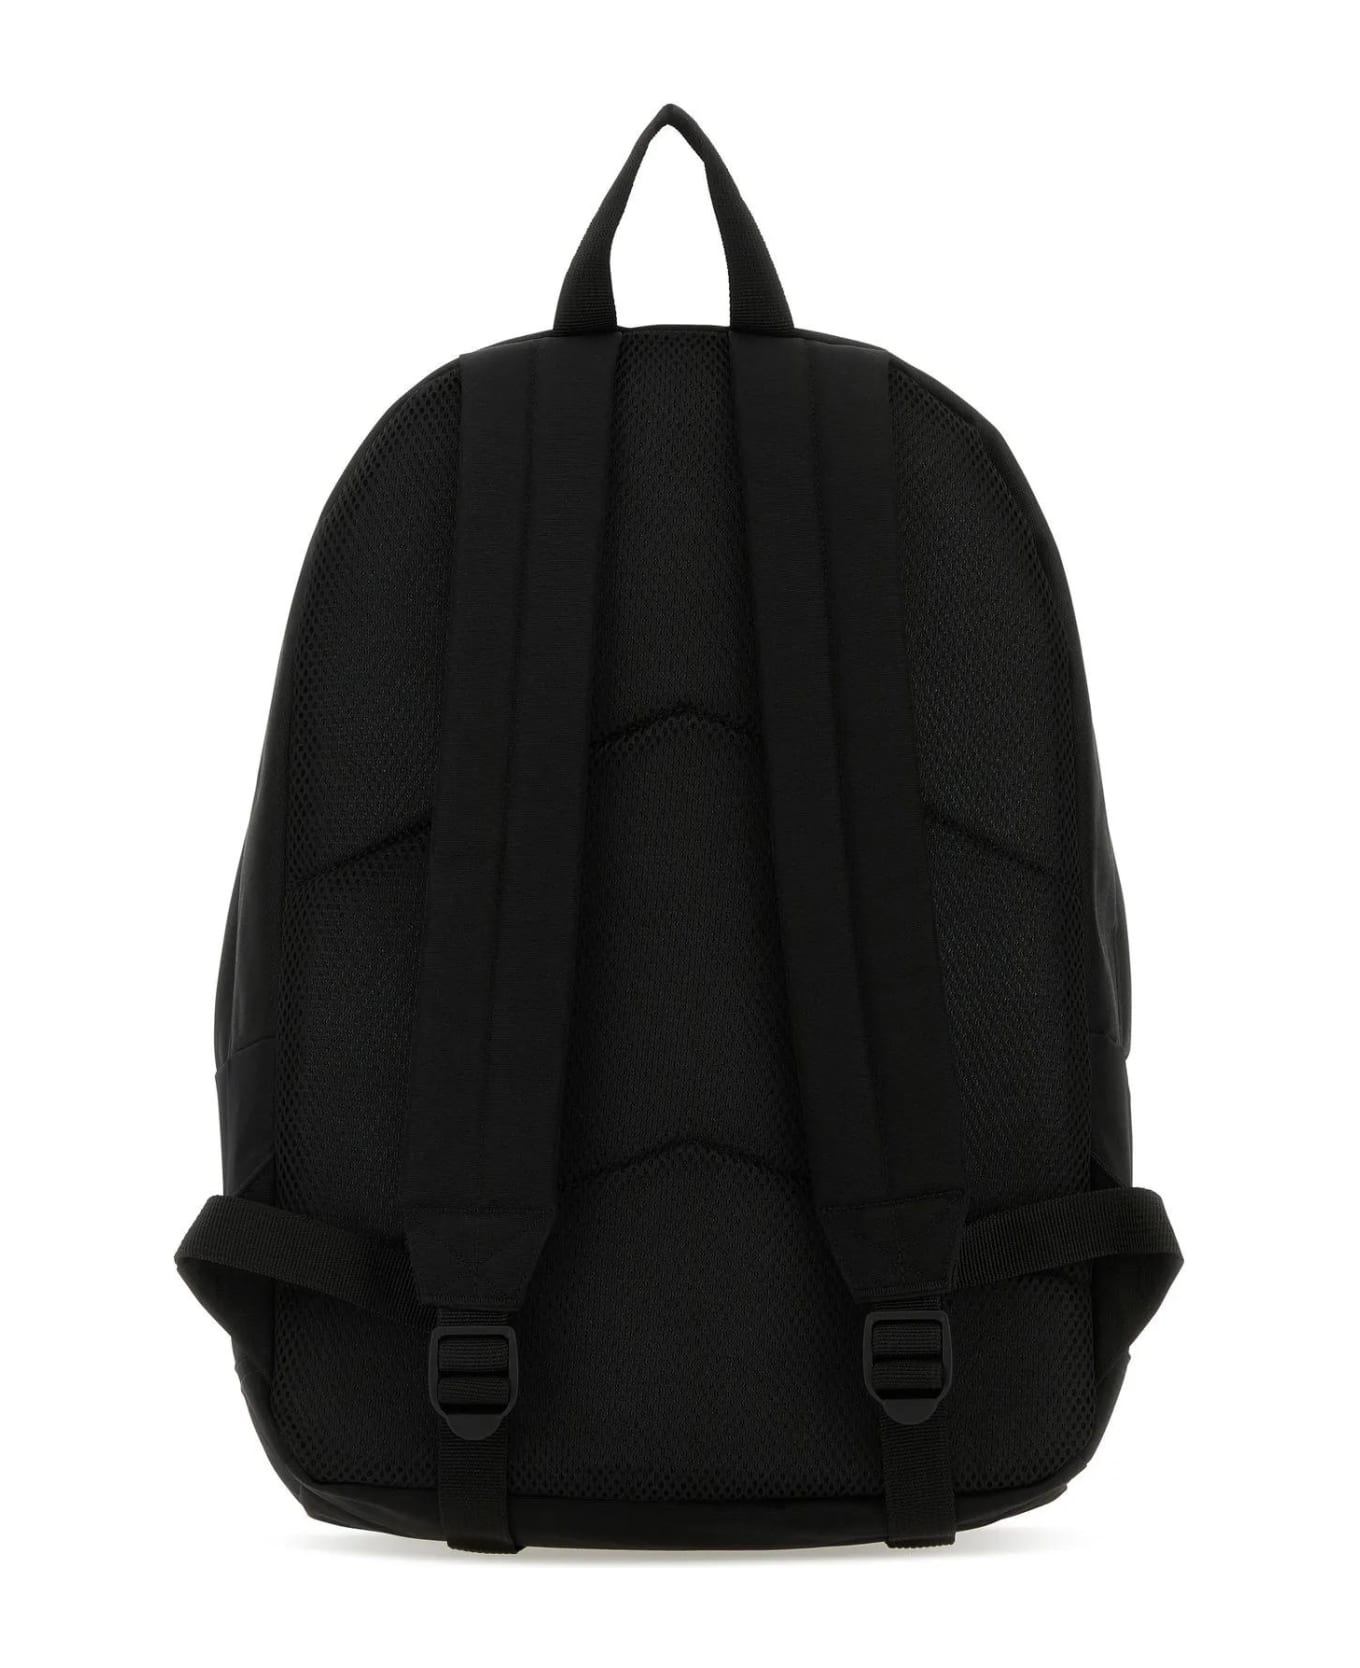 Carhartt Black Fabric Jake Backpack - Black